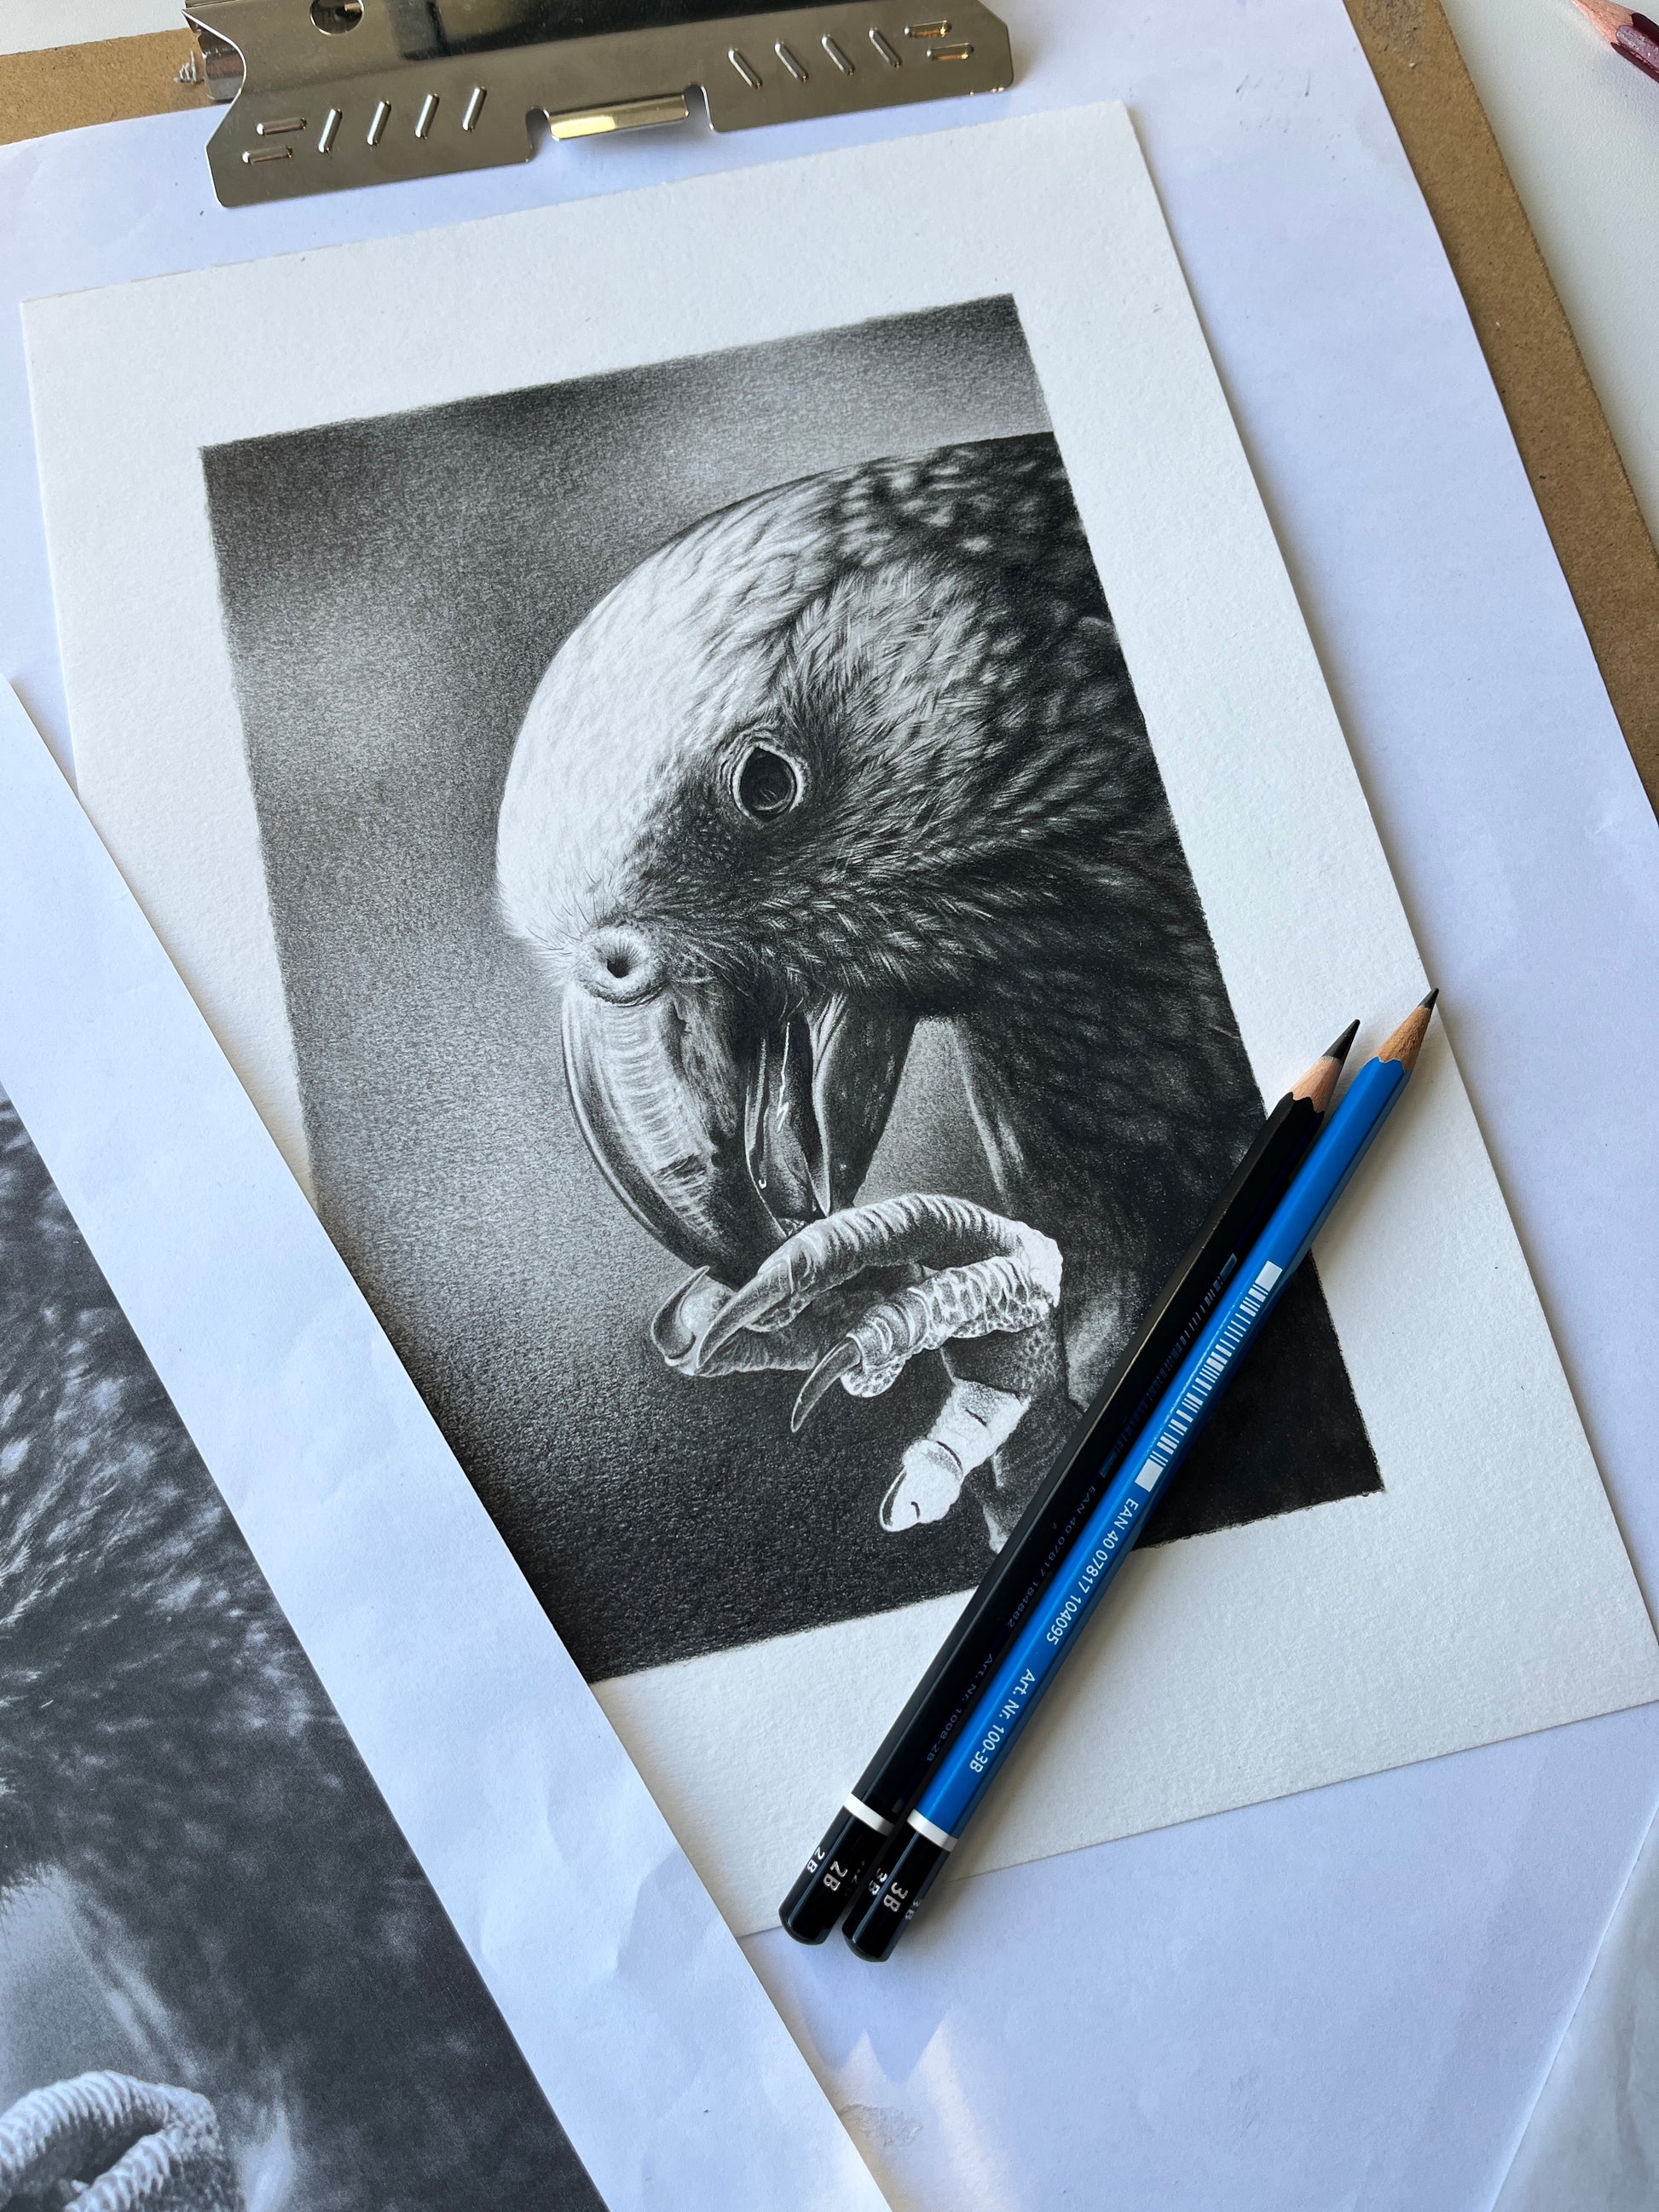 Parrot beak and claw on kaka art